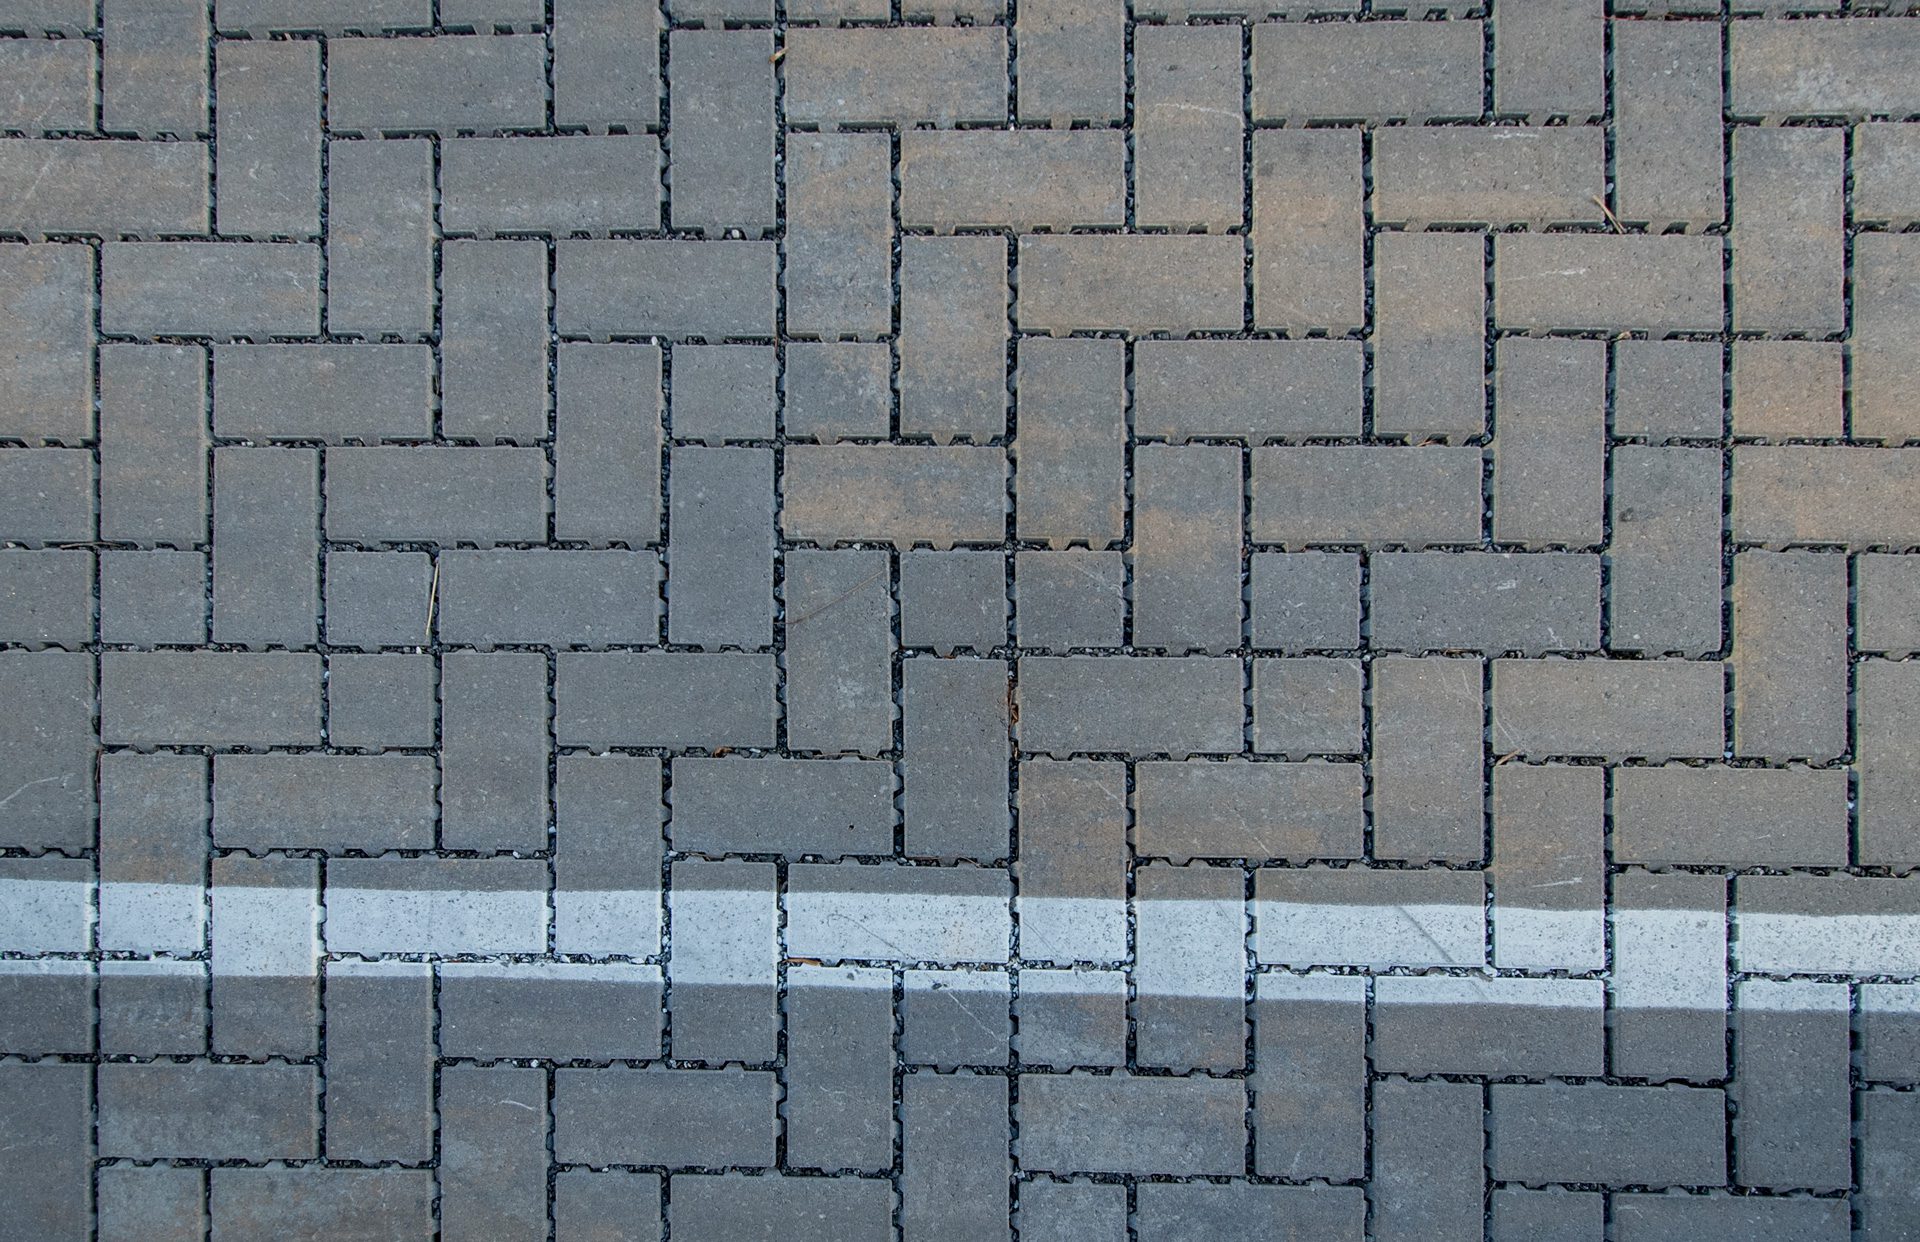 Cotswold-Medical-parking-lot-zoom detail pavers